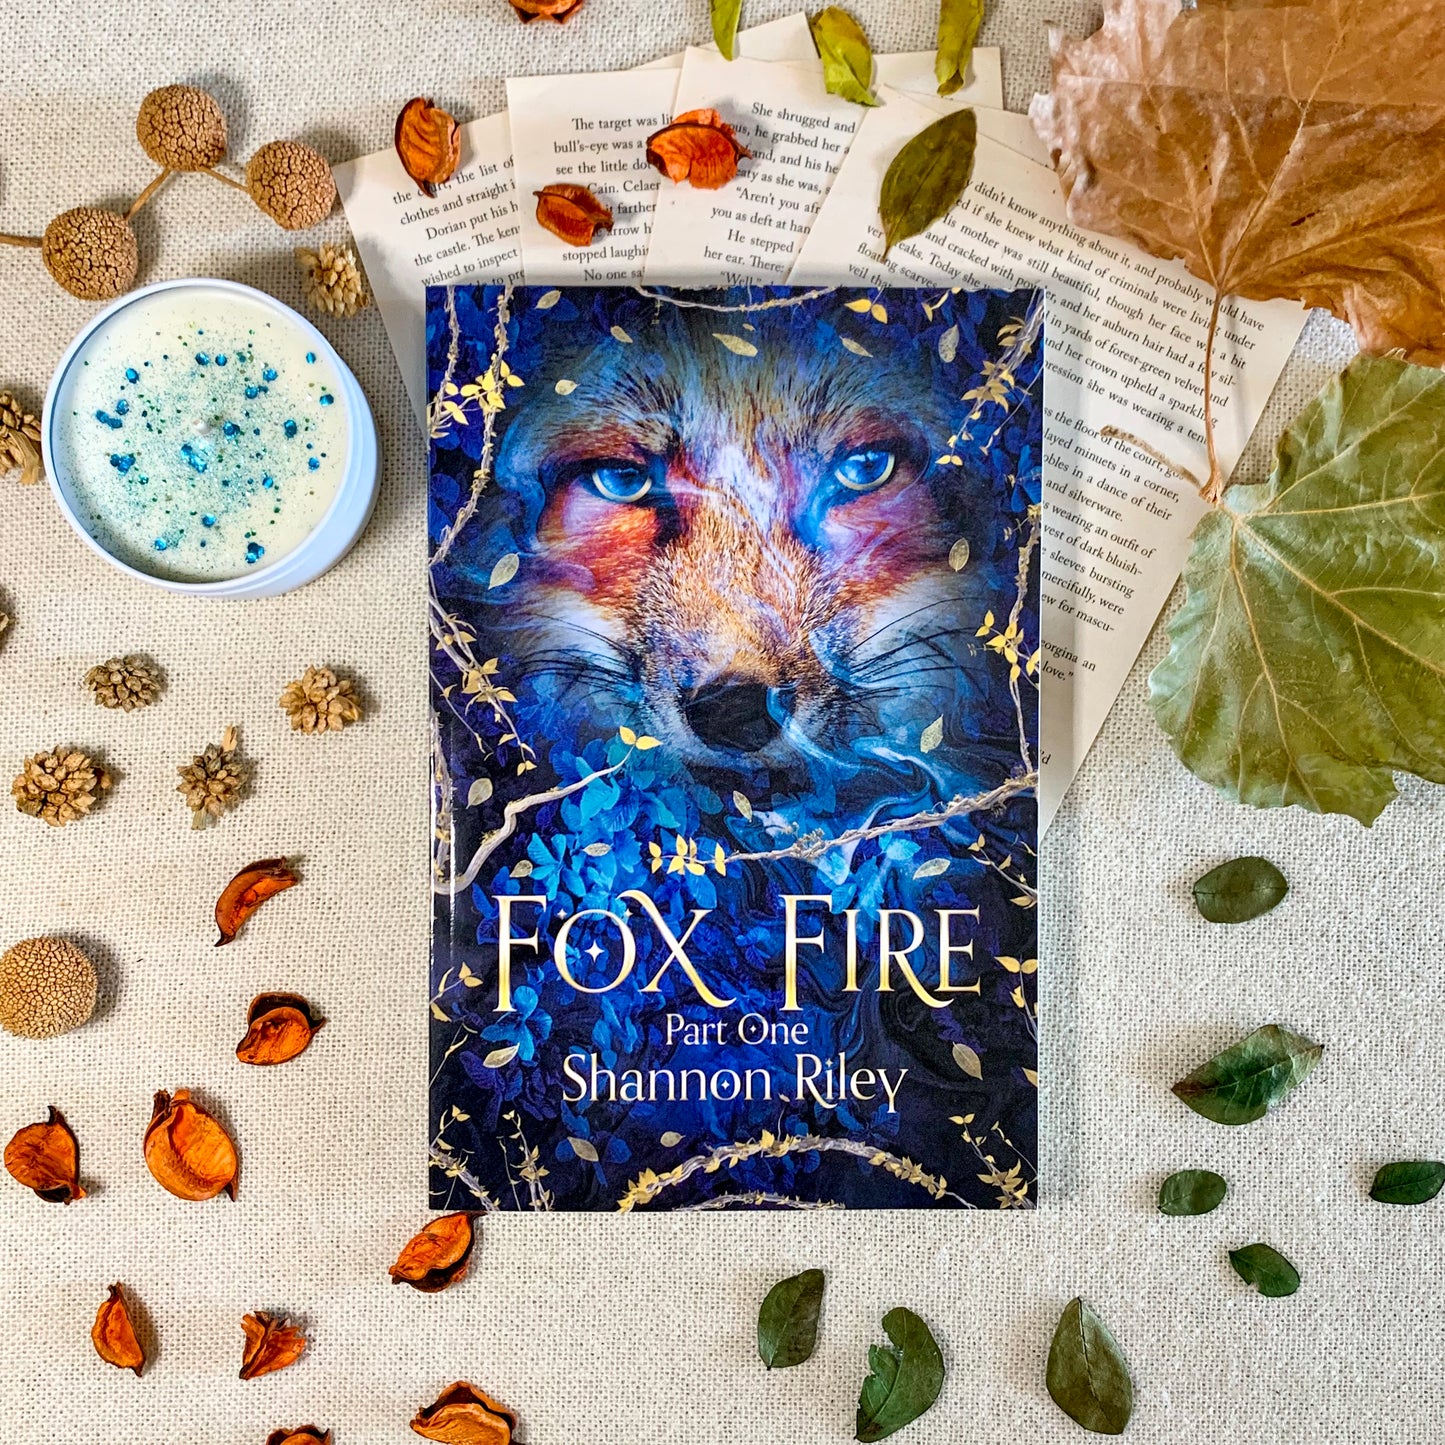 Fox Fire by Shannon Riley